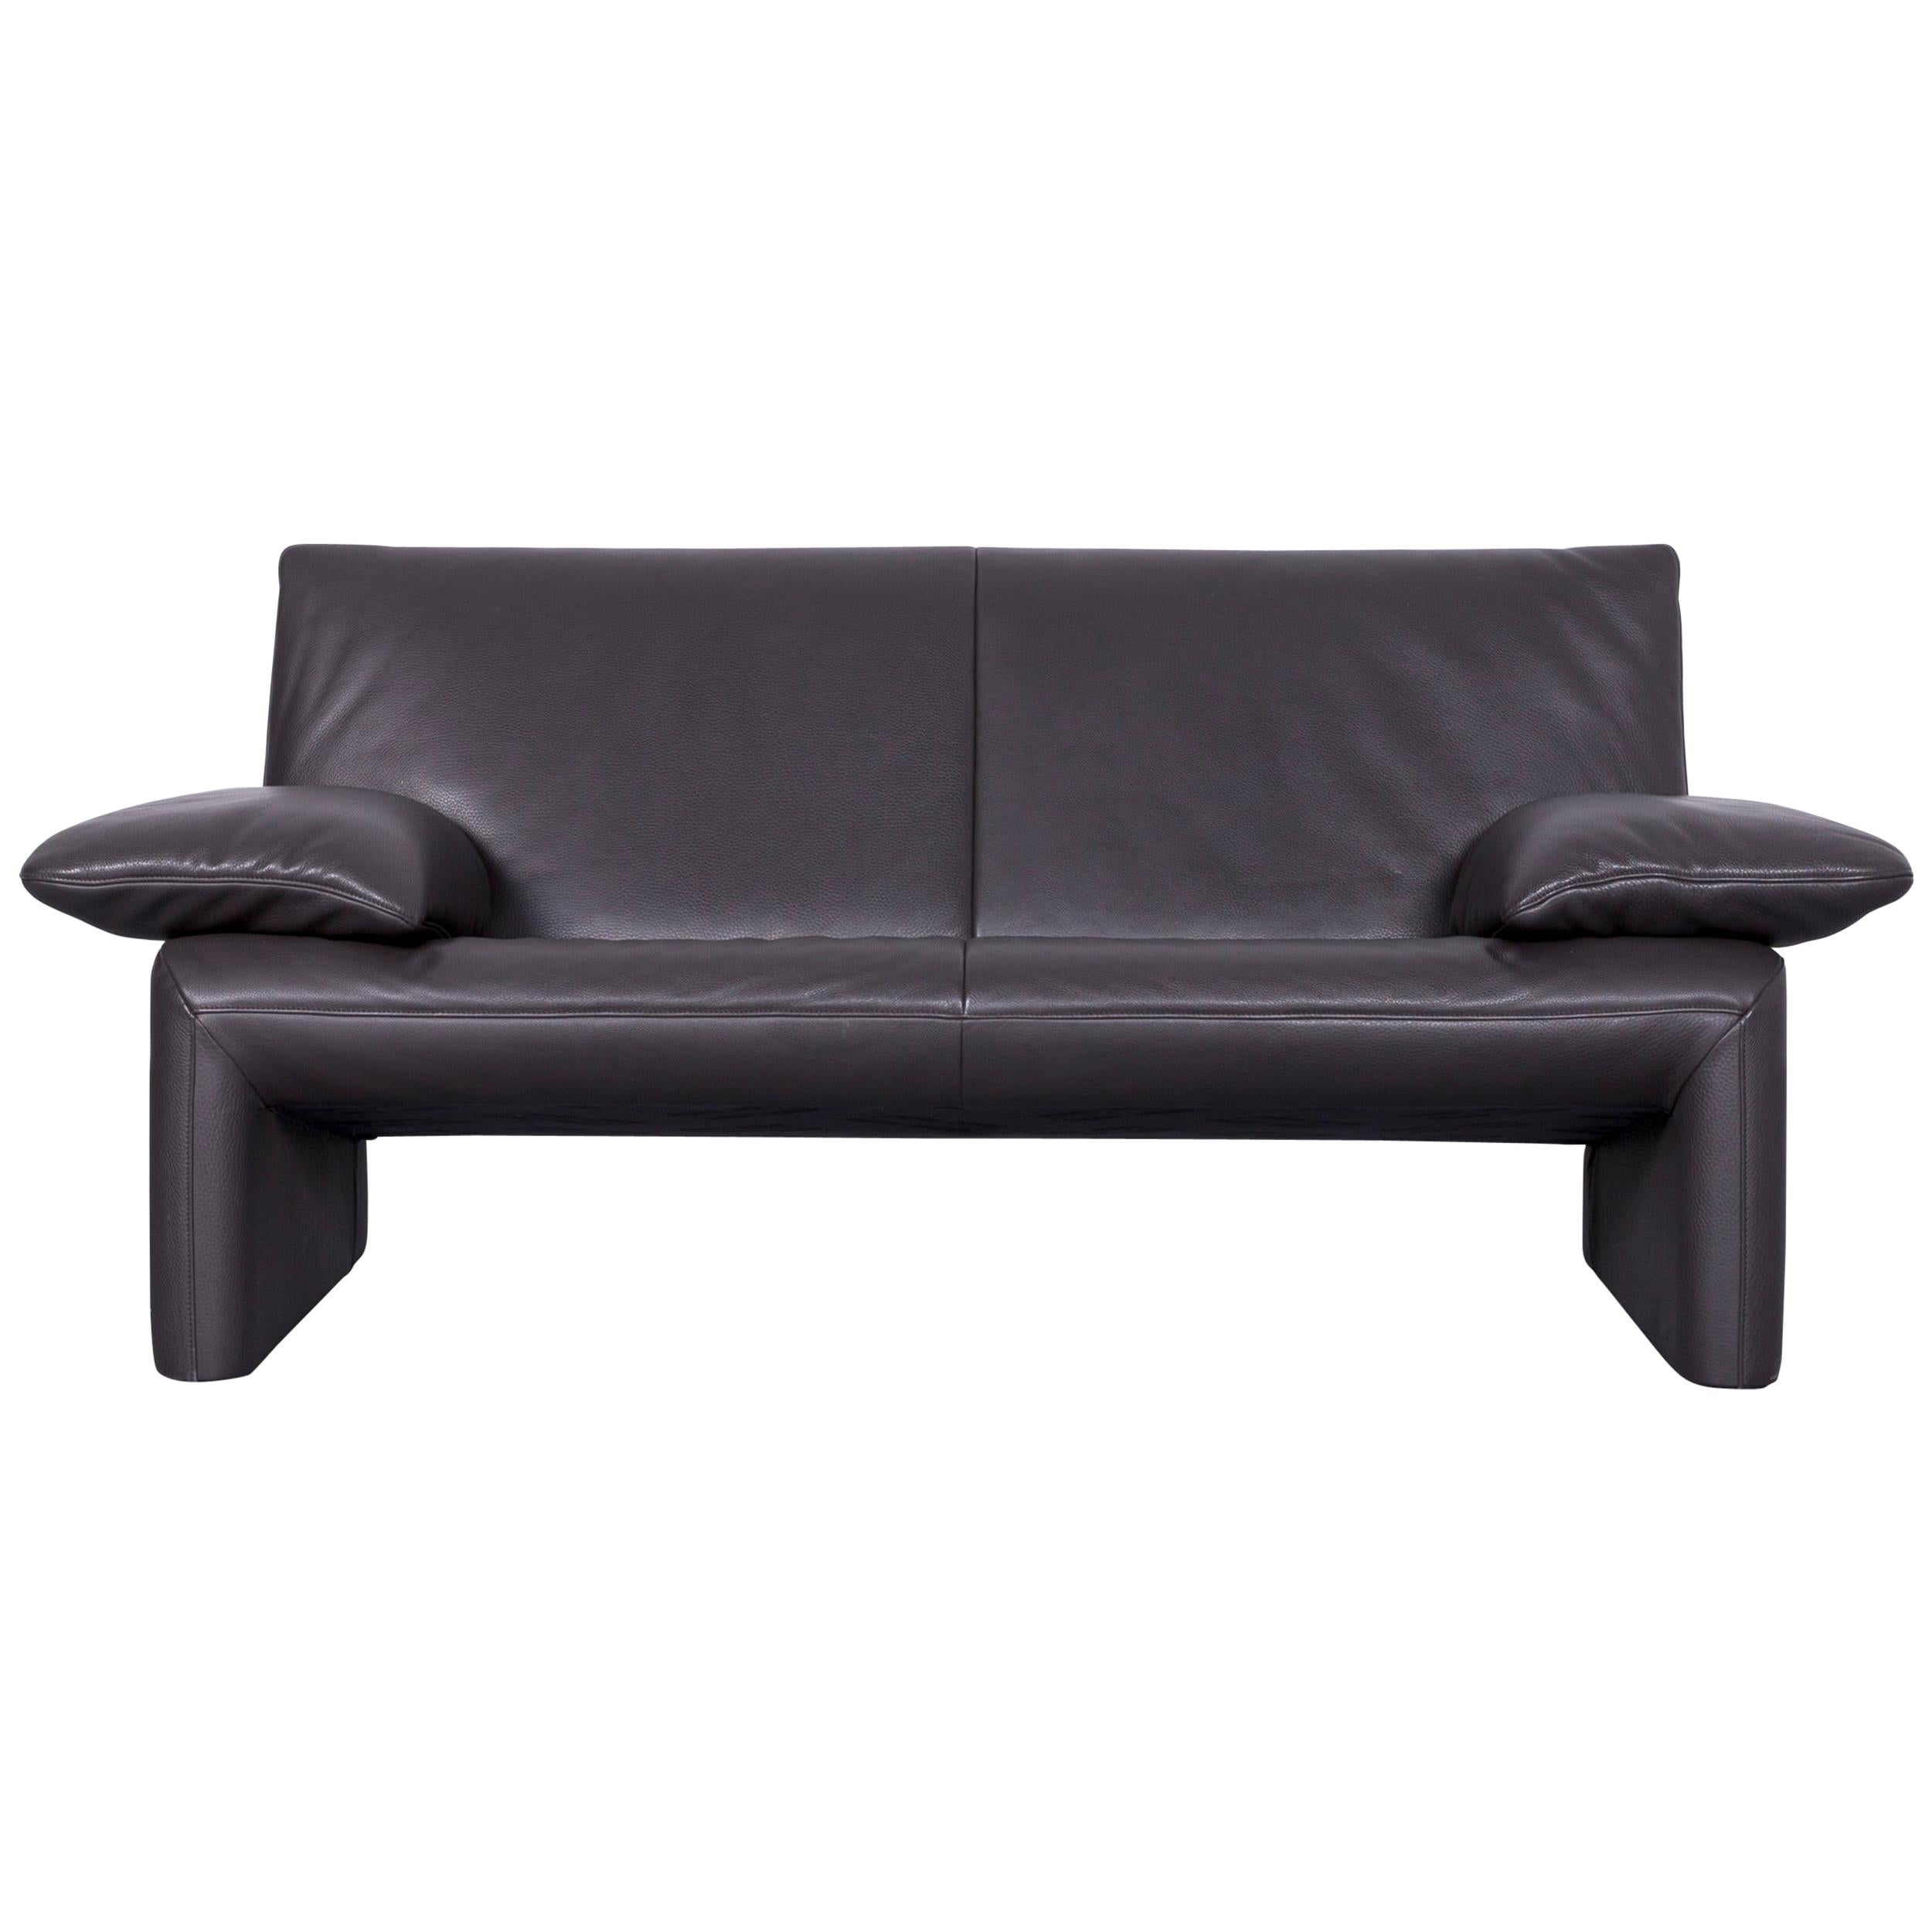 Jori Linea Designer Leather Sofa Grey Two-Seat Couch